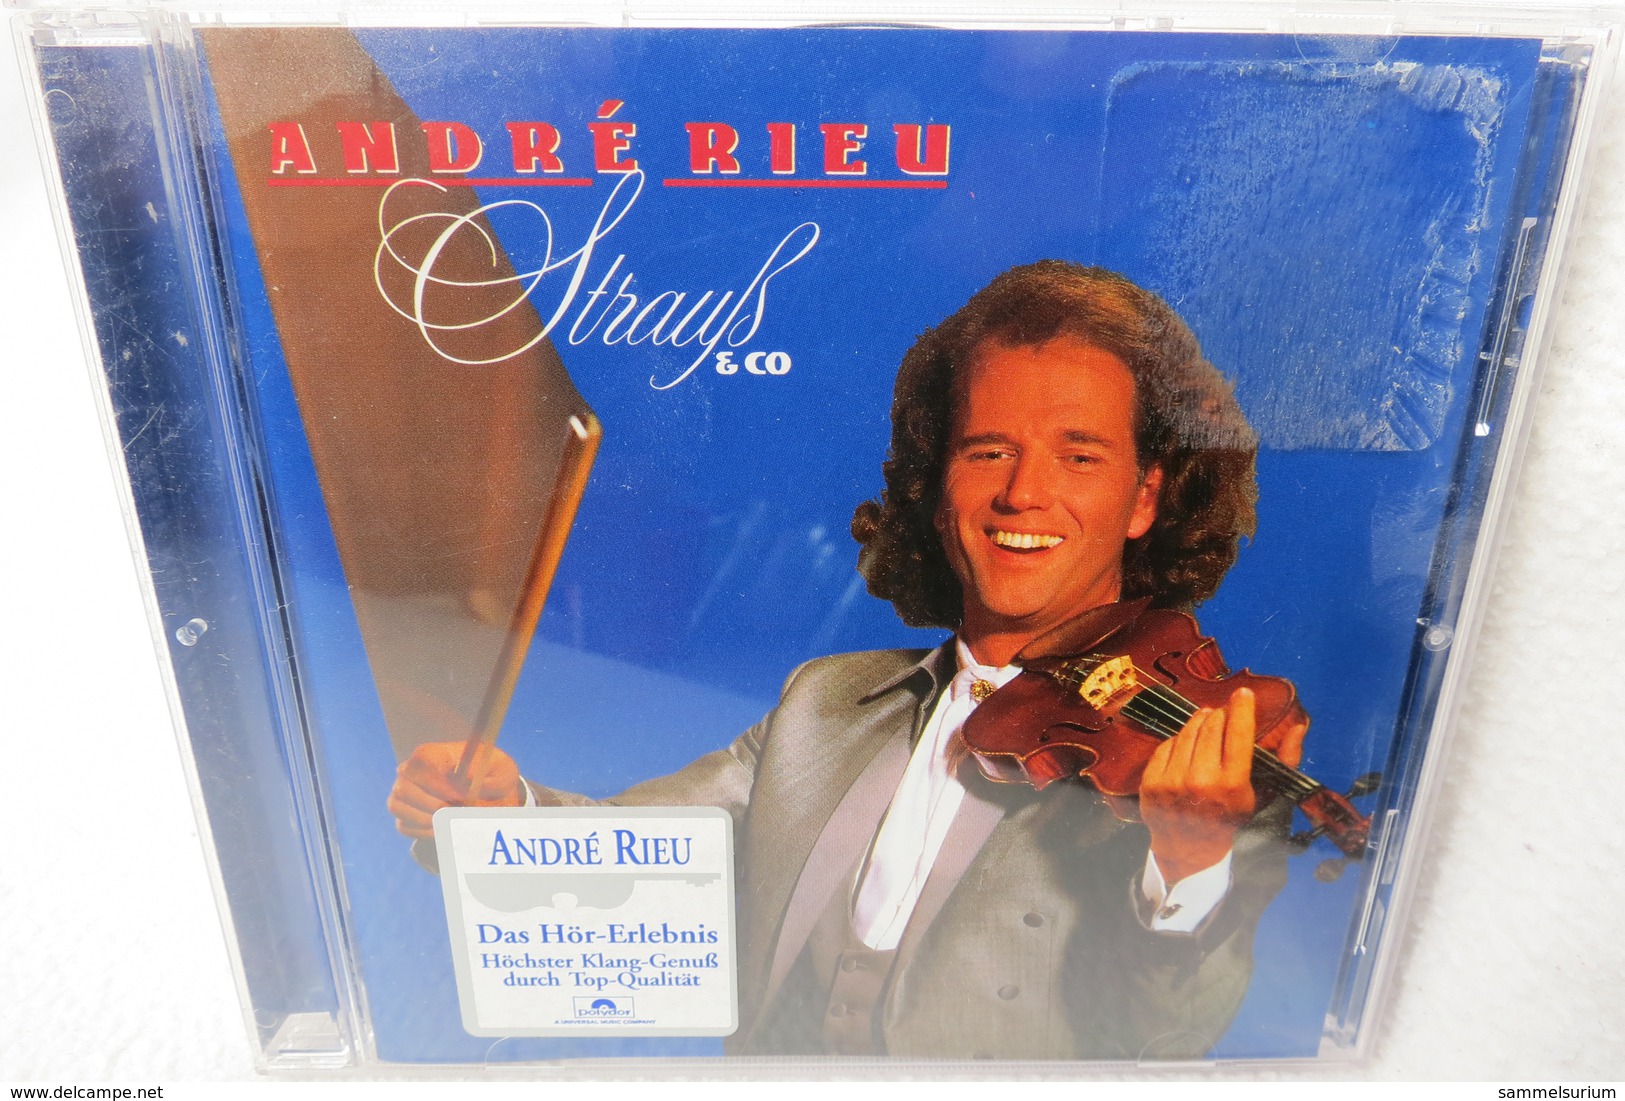 CD "André Rieu" Strauß & Co. - Instrumental